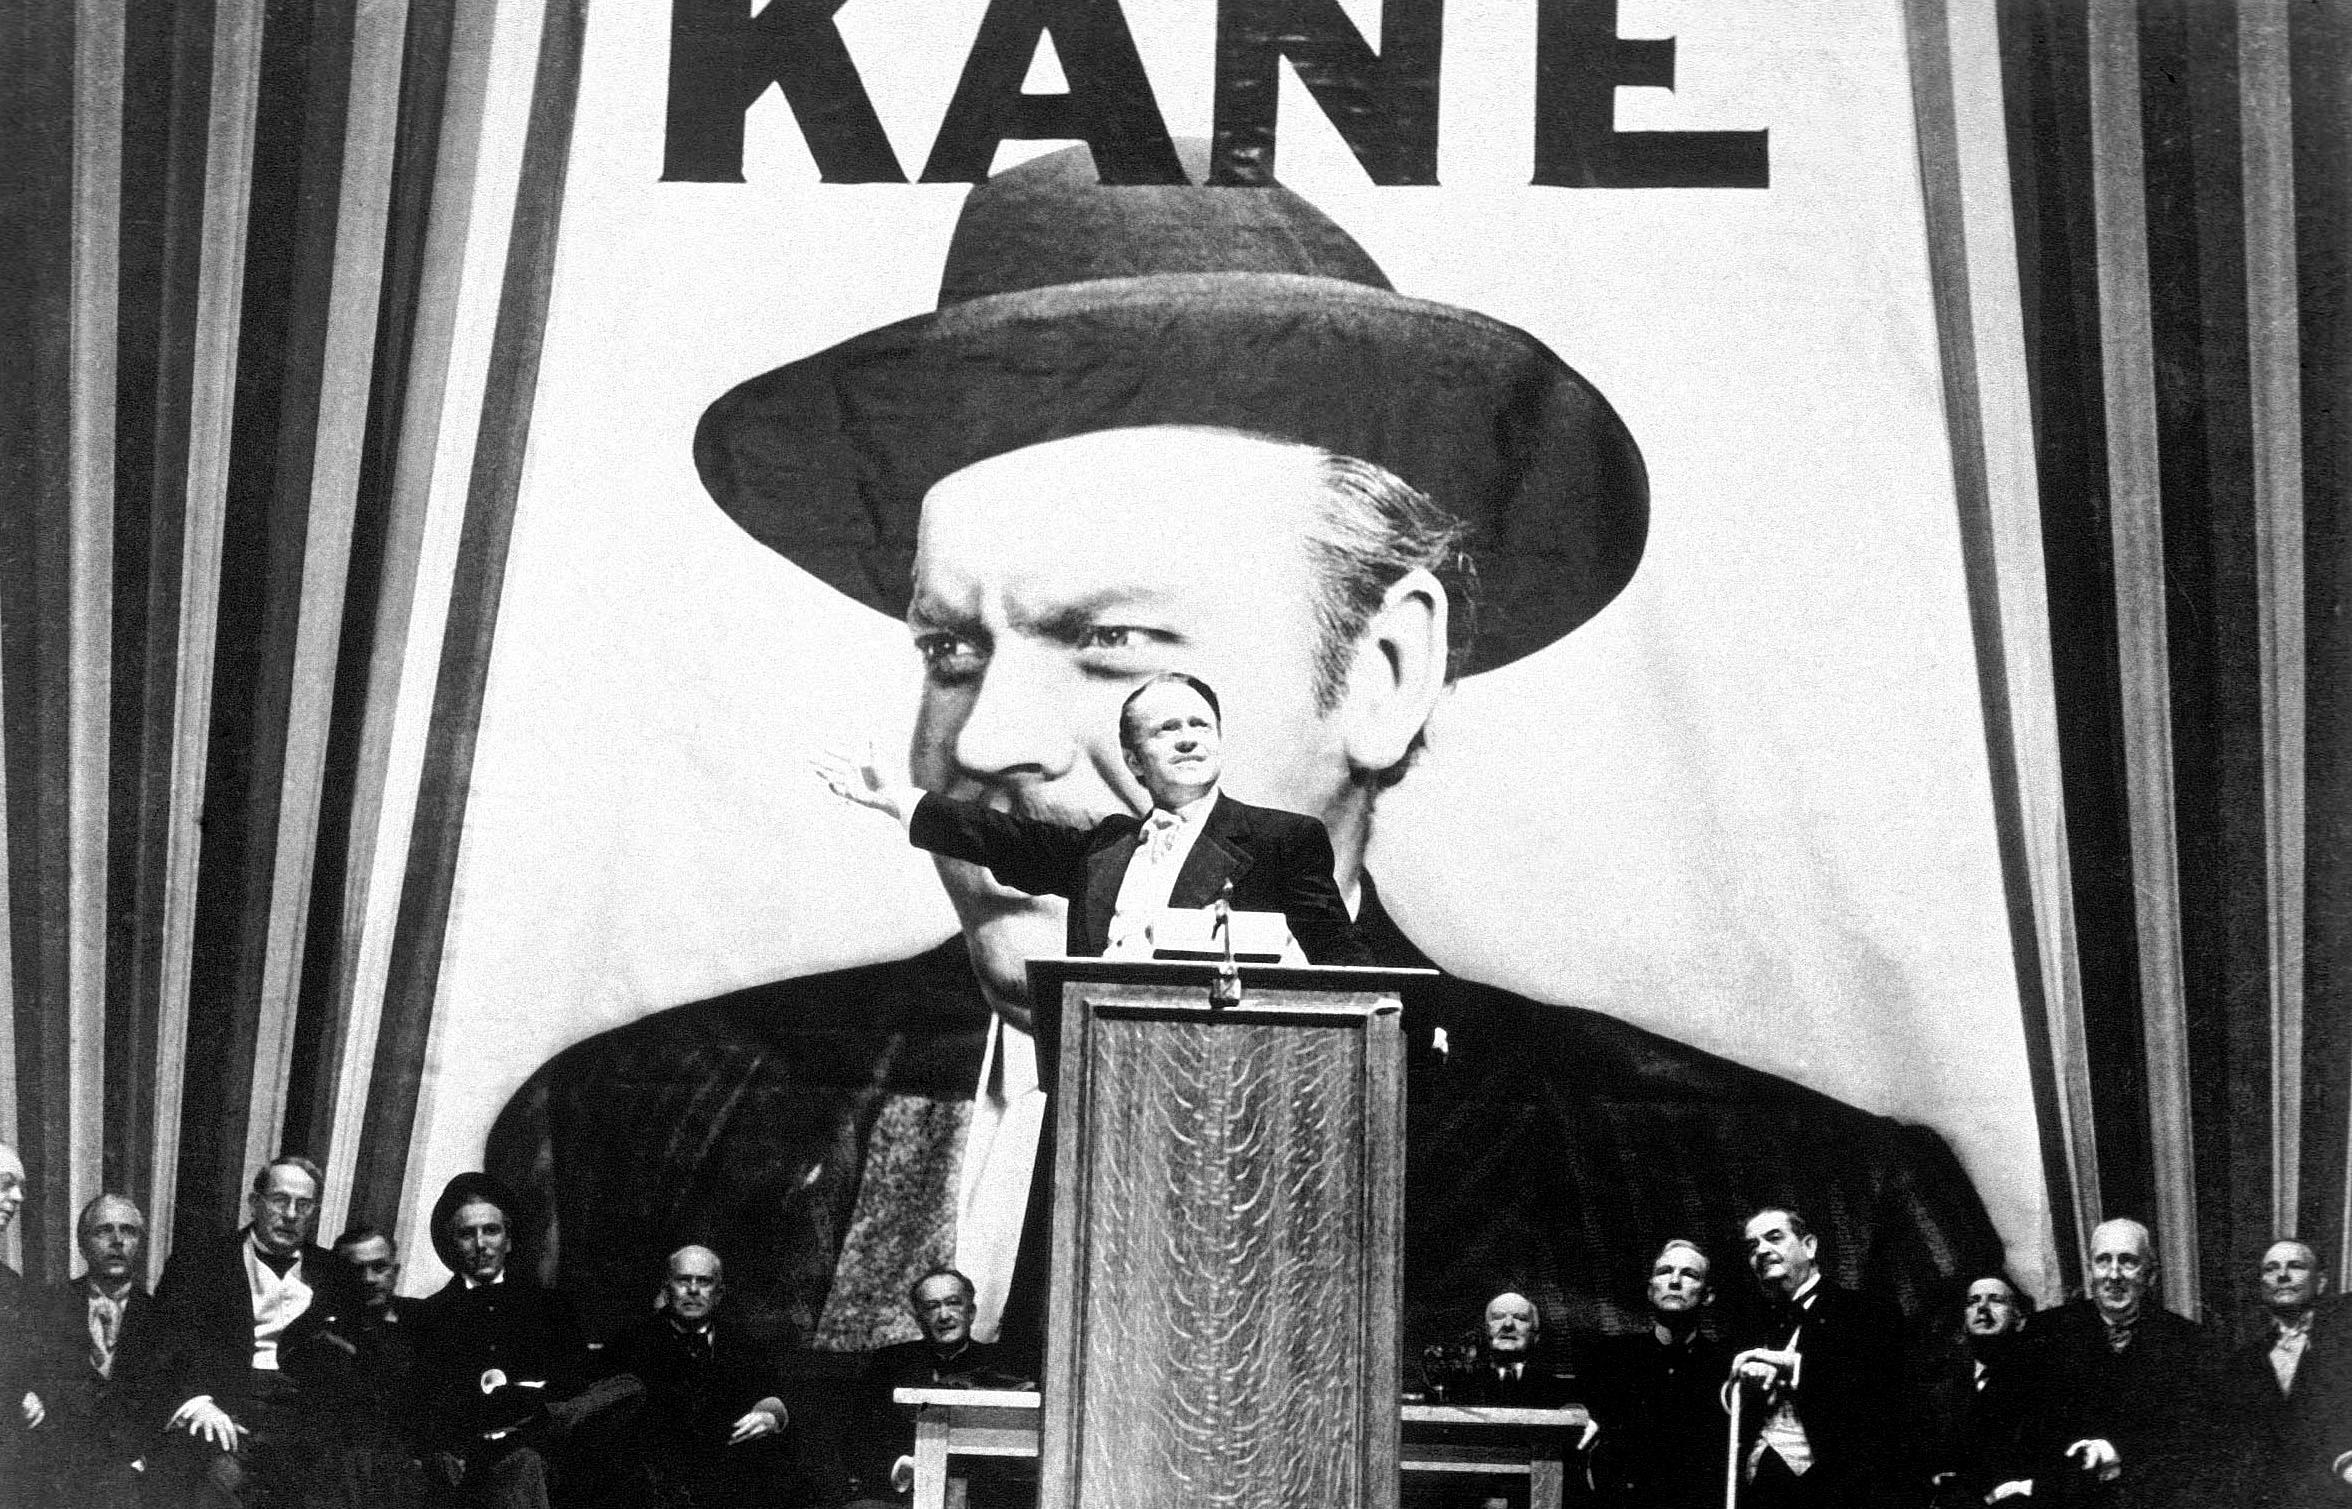 Orson Welles’ Citizen Kane Still Resonates In Today’s Culture